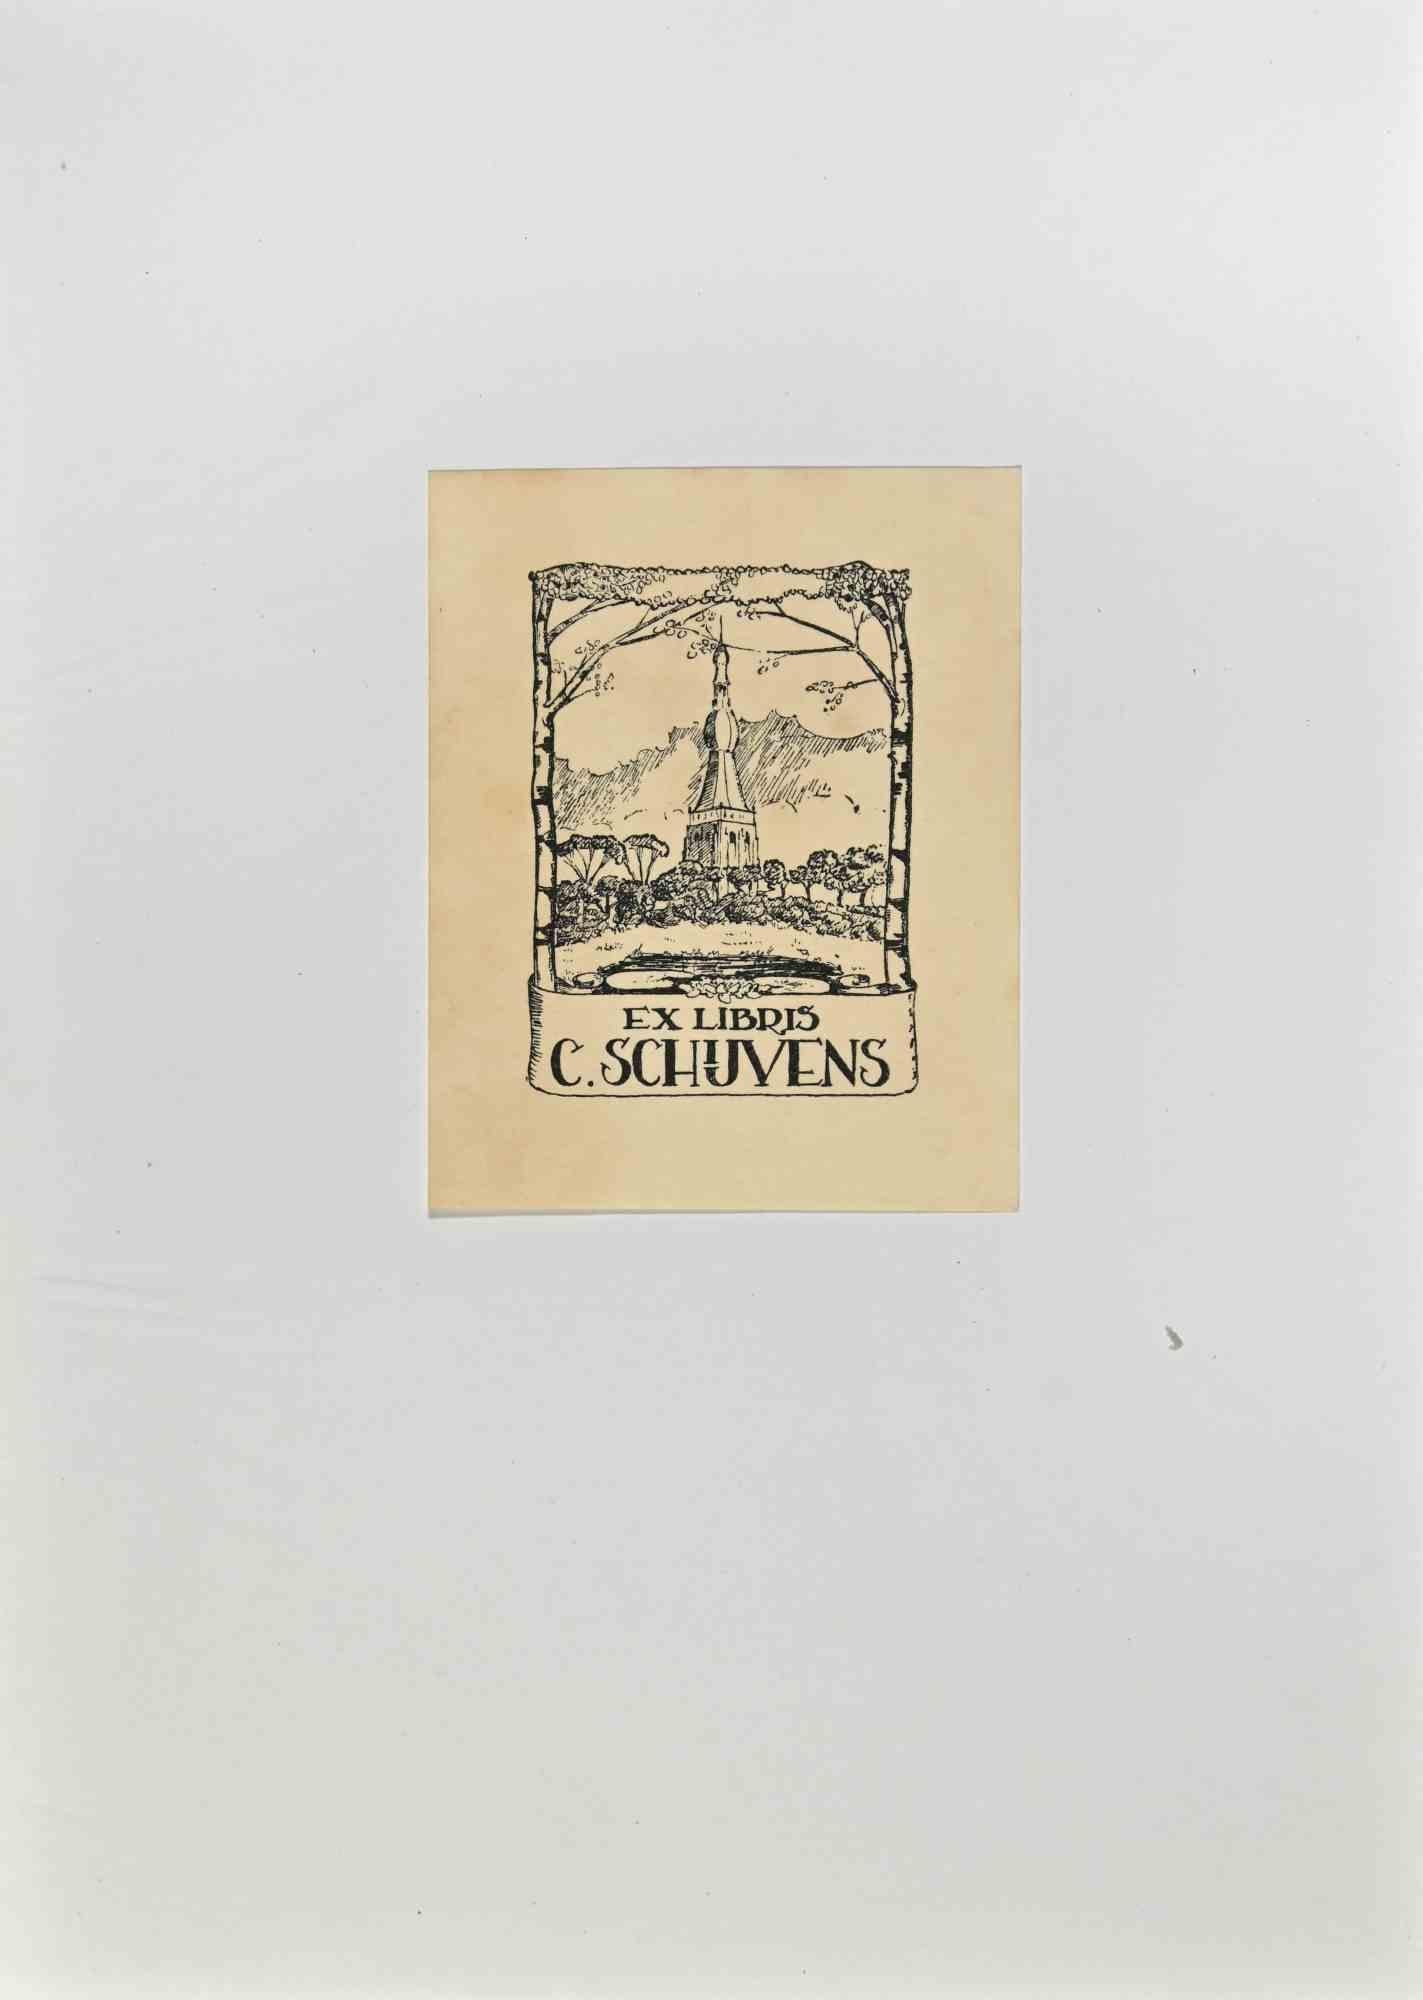  Ex Libris -C. Schuvens - Woodcut - Mid 20th Century - Art by Unknown